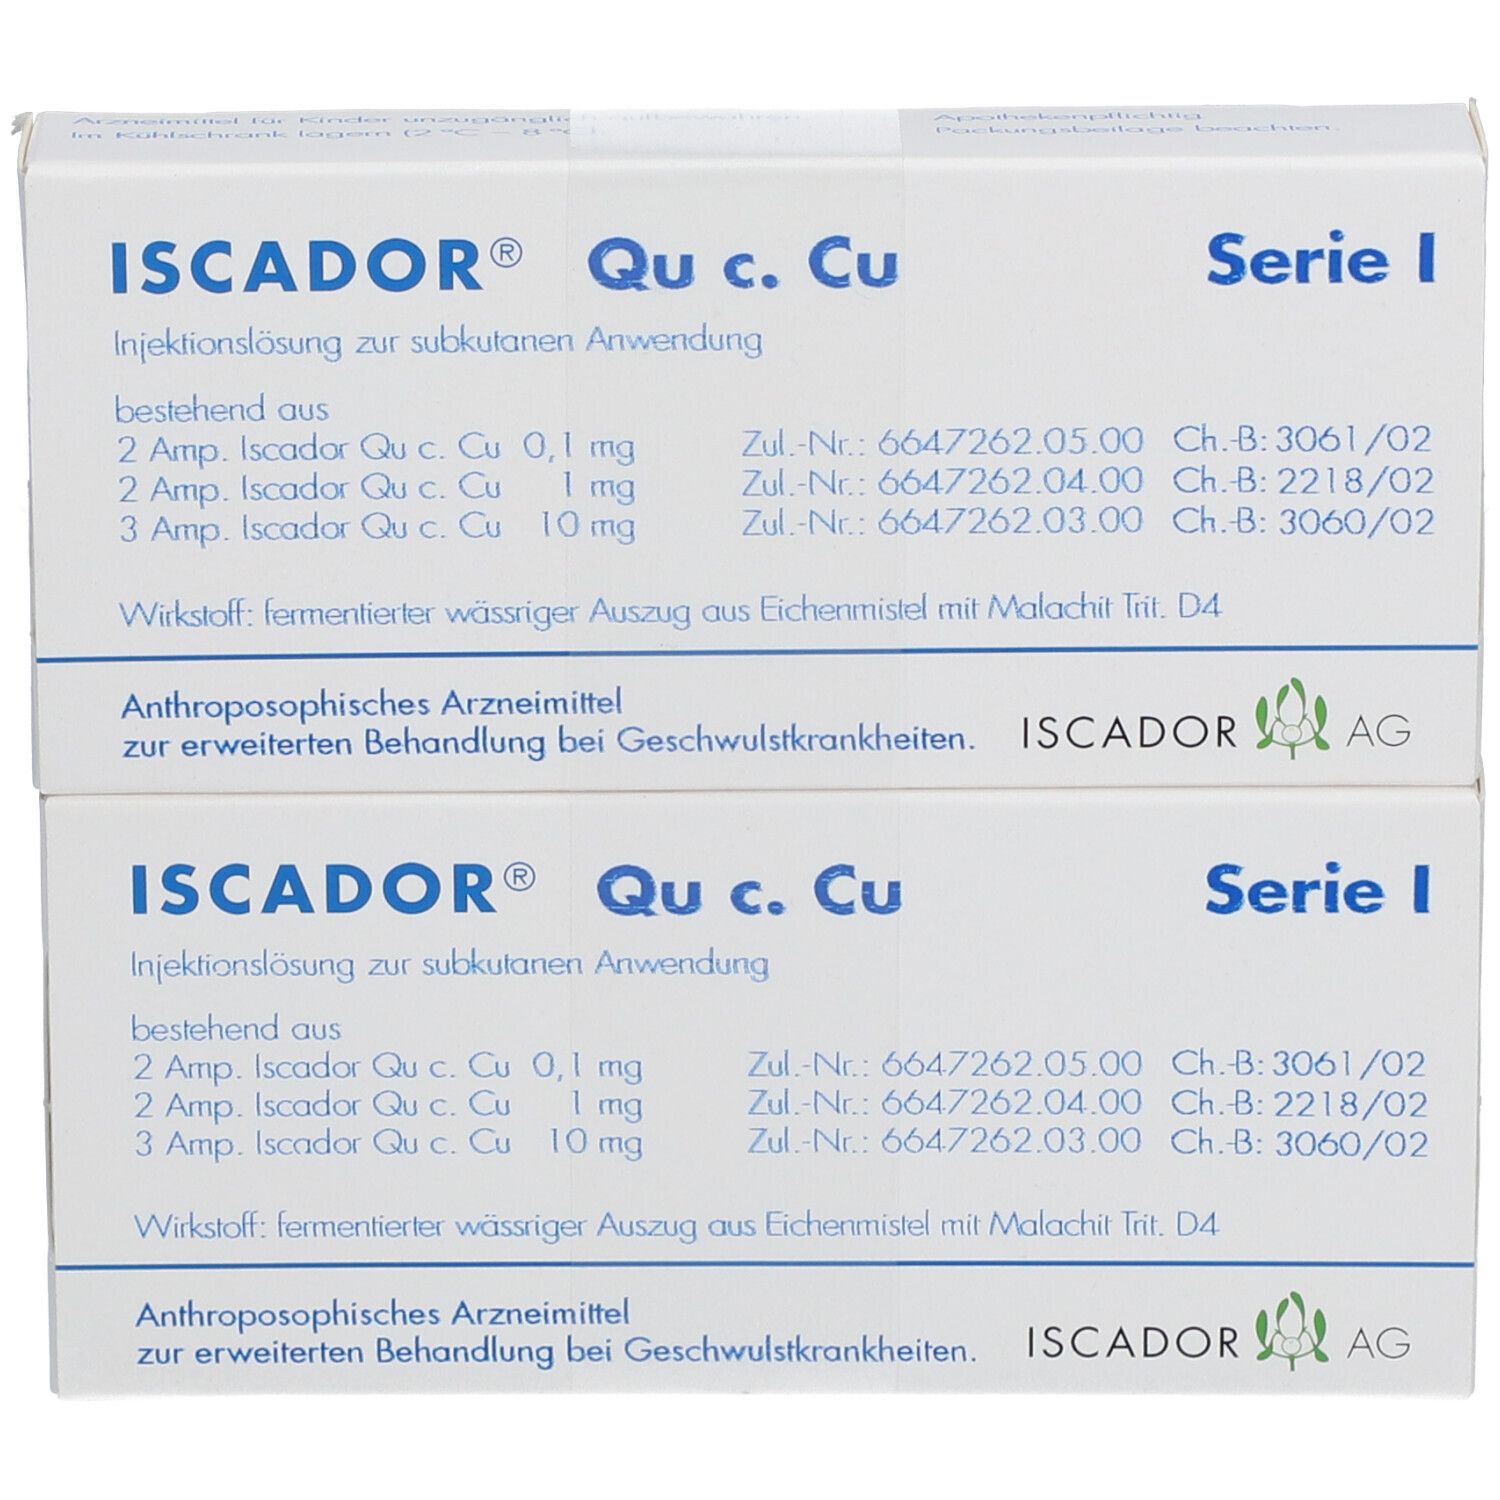 ISCADOR® Qu c. Cu Serie I